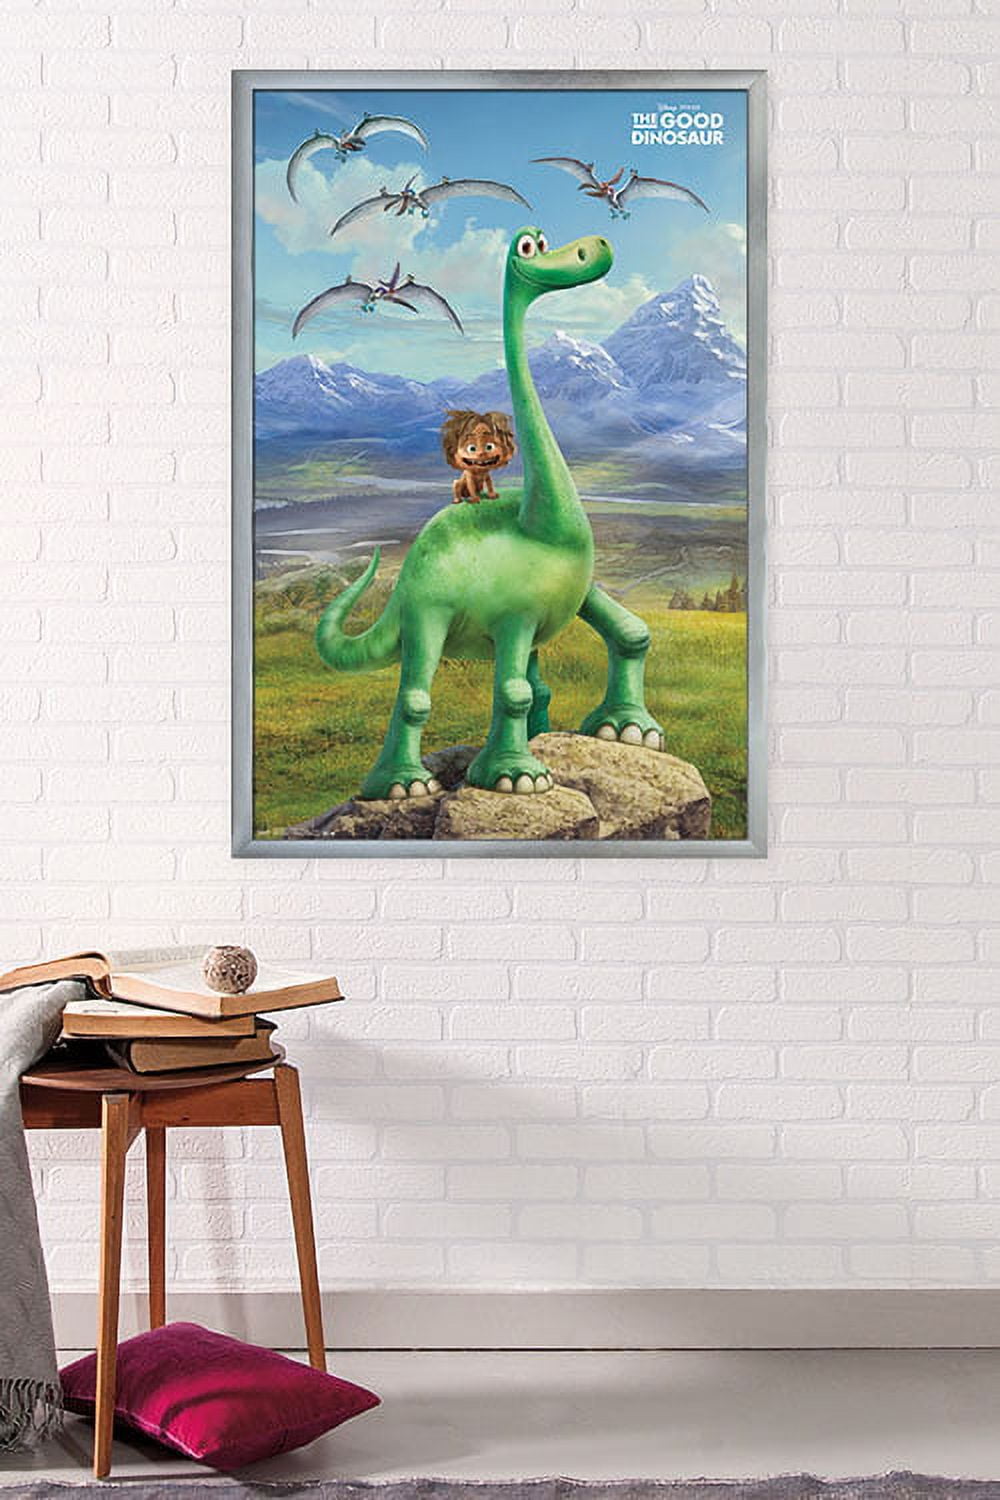 Disney Pixar The Good Dinosaur - Group Wall Poster, 22.375 x 34